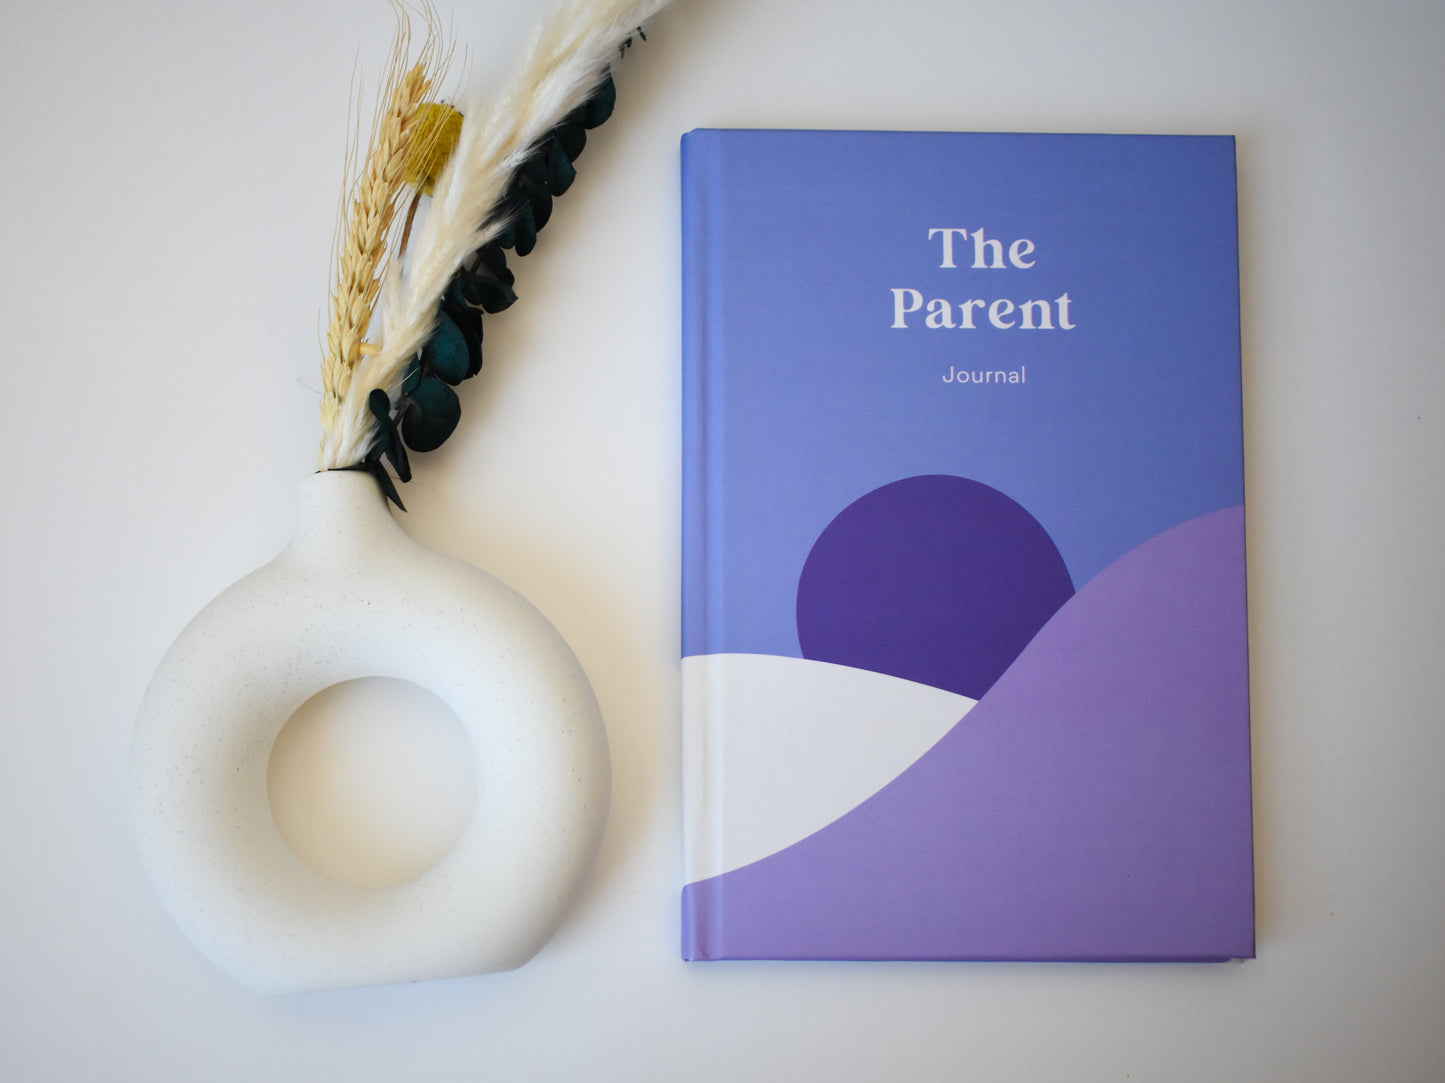 The Parents Journal